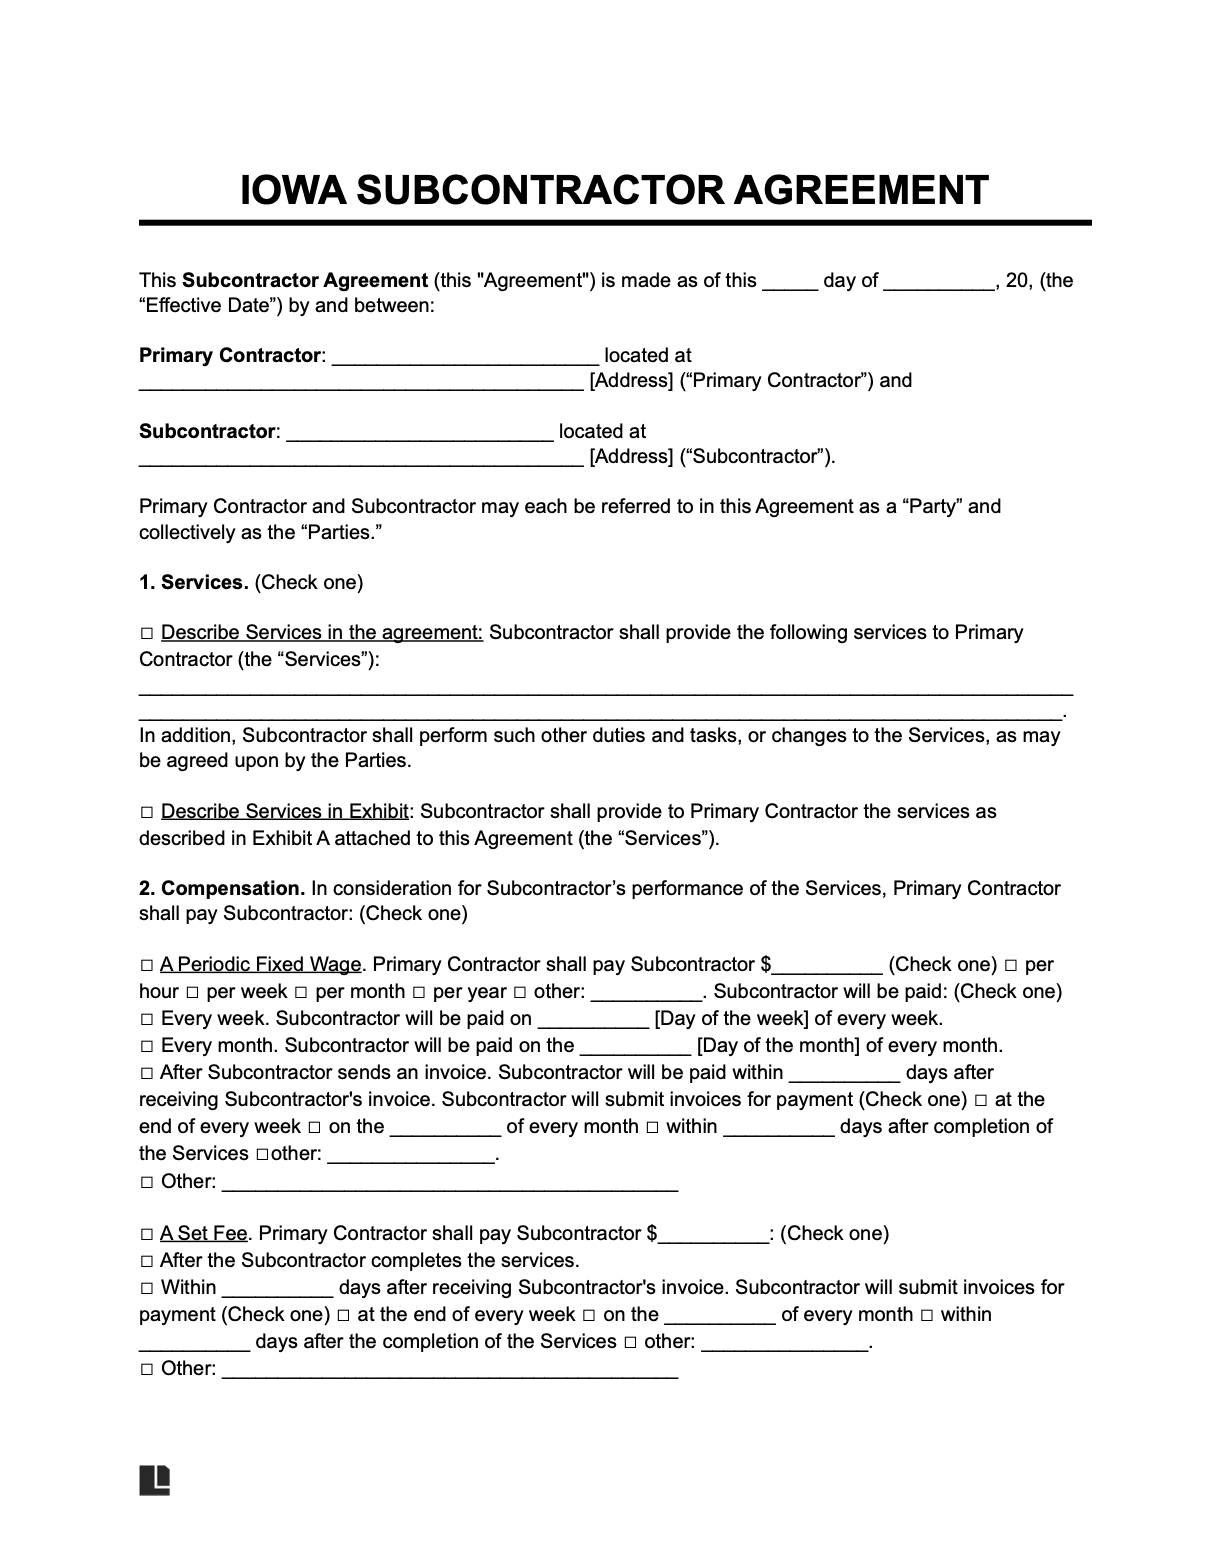 iowa subcontractor agreement template